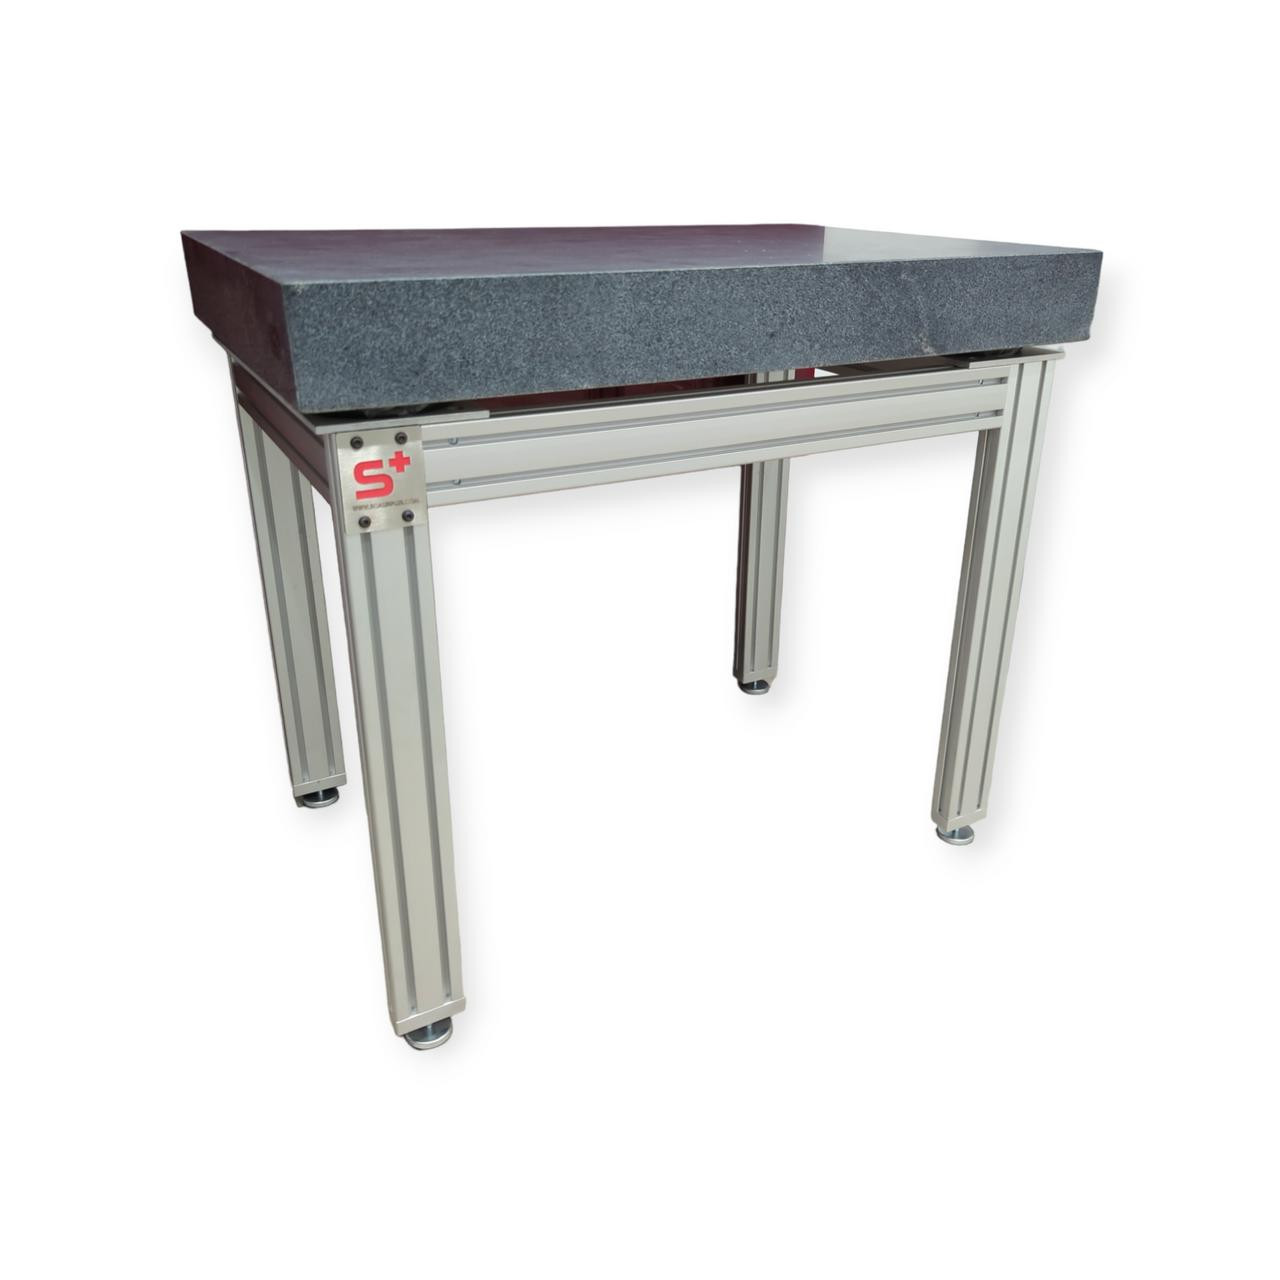 Scales Plus AL-G-2436 Anti-Vibration Table, Granite Top, 24 x 36